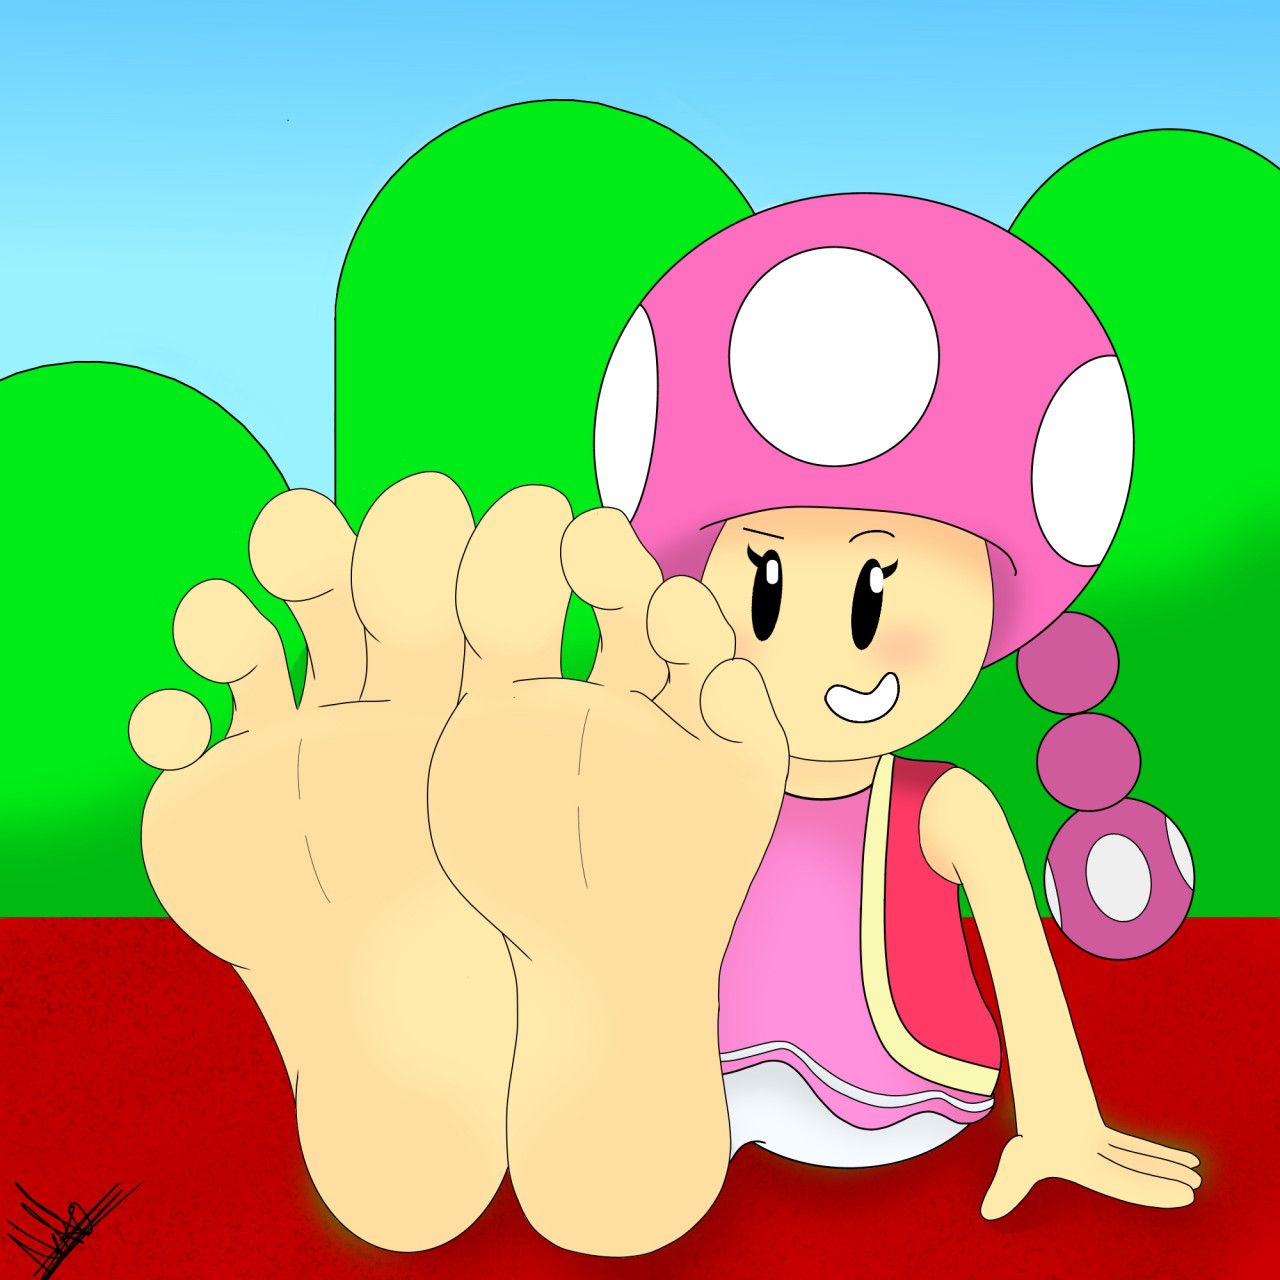 Toadette's feet